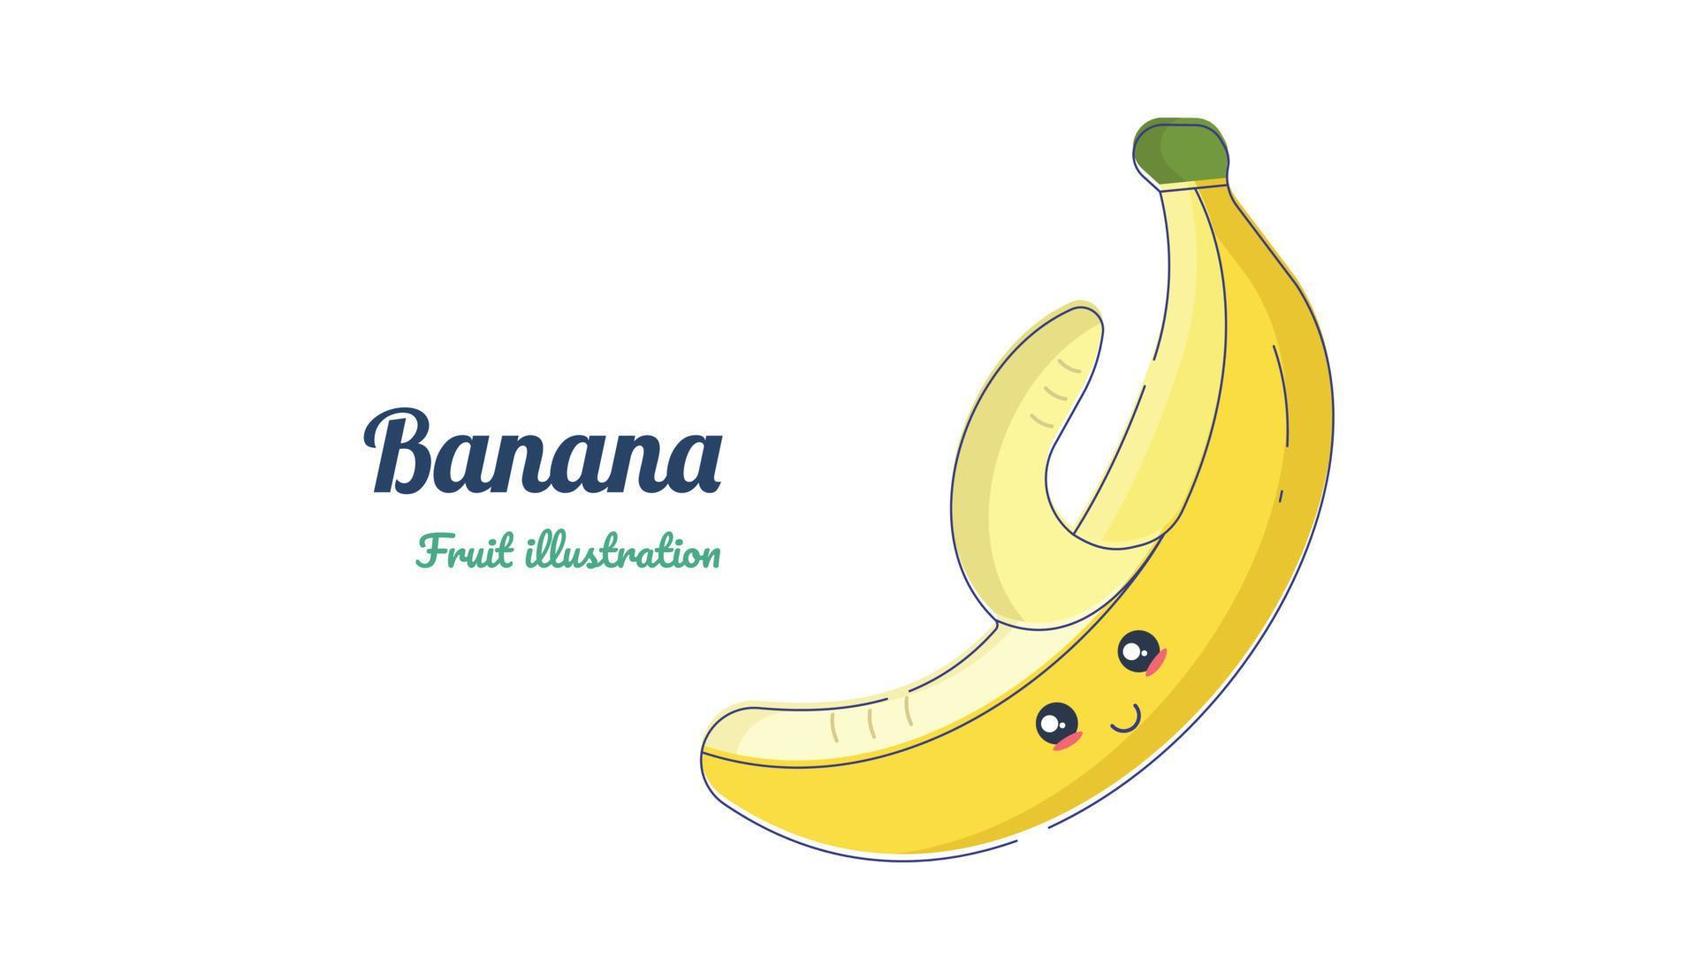 banan illustration design vektor